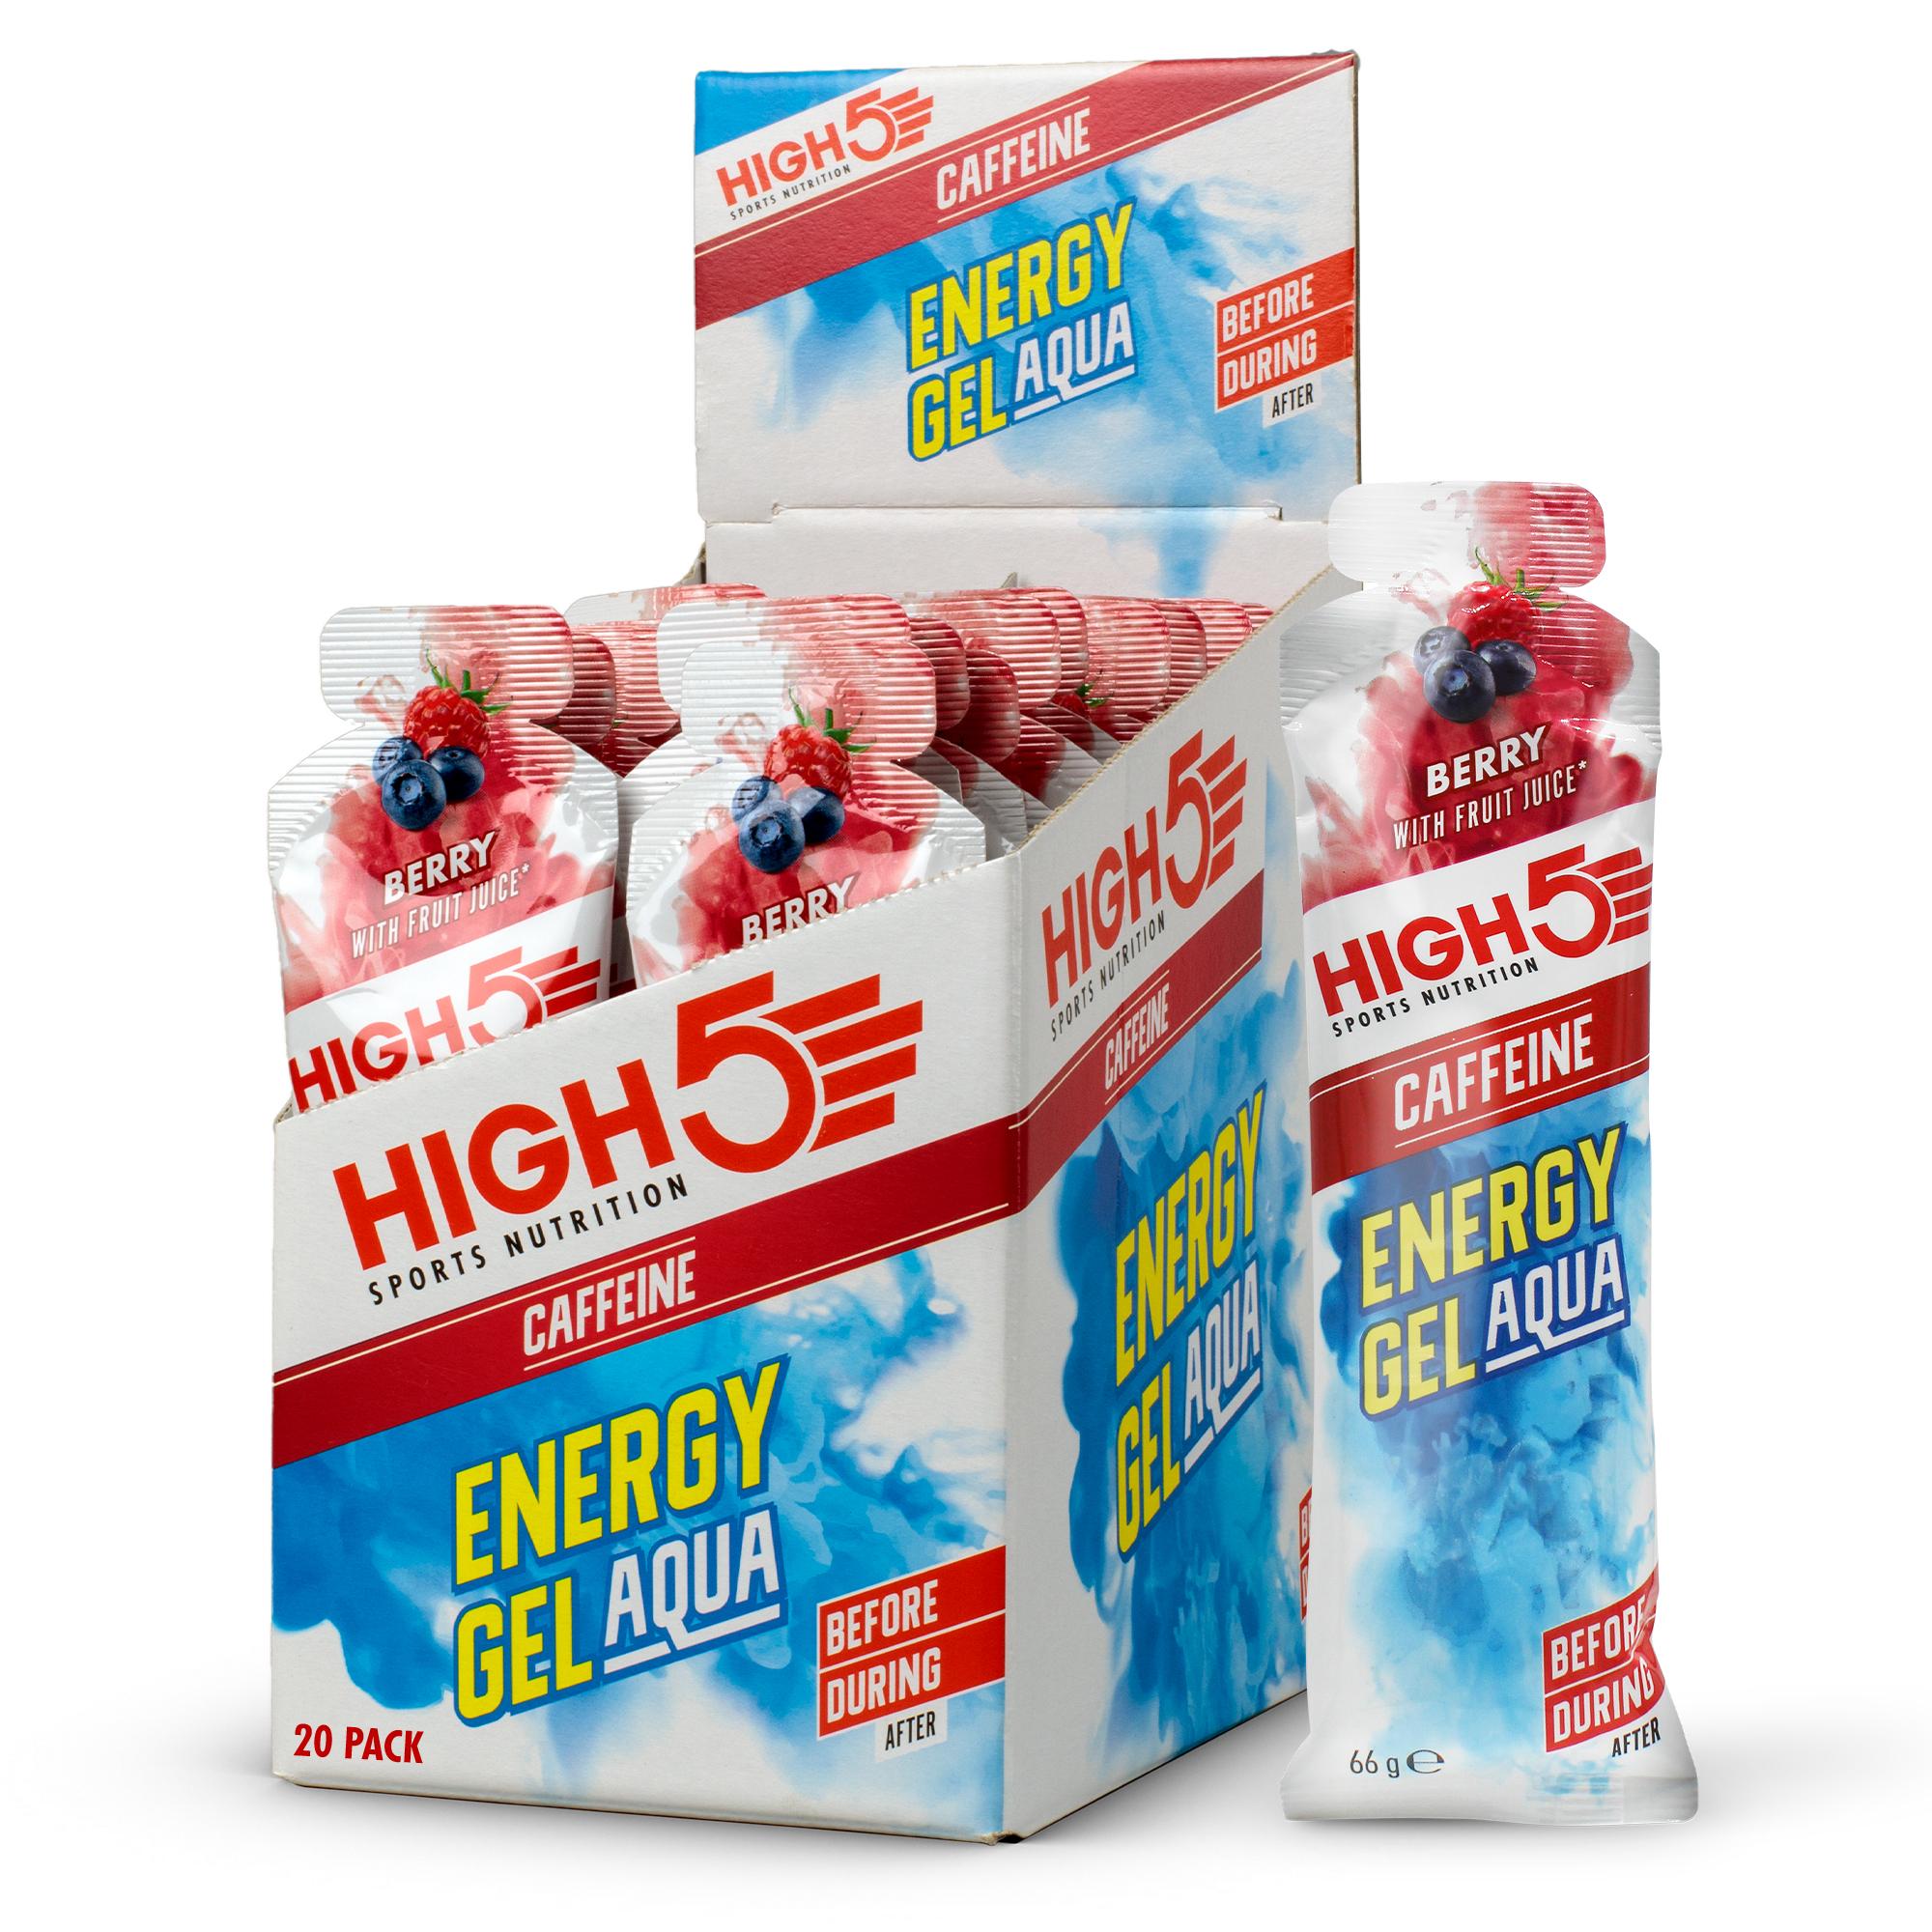 High5 Energy Gel Aqua Caffeine (20 X 66g)